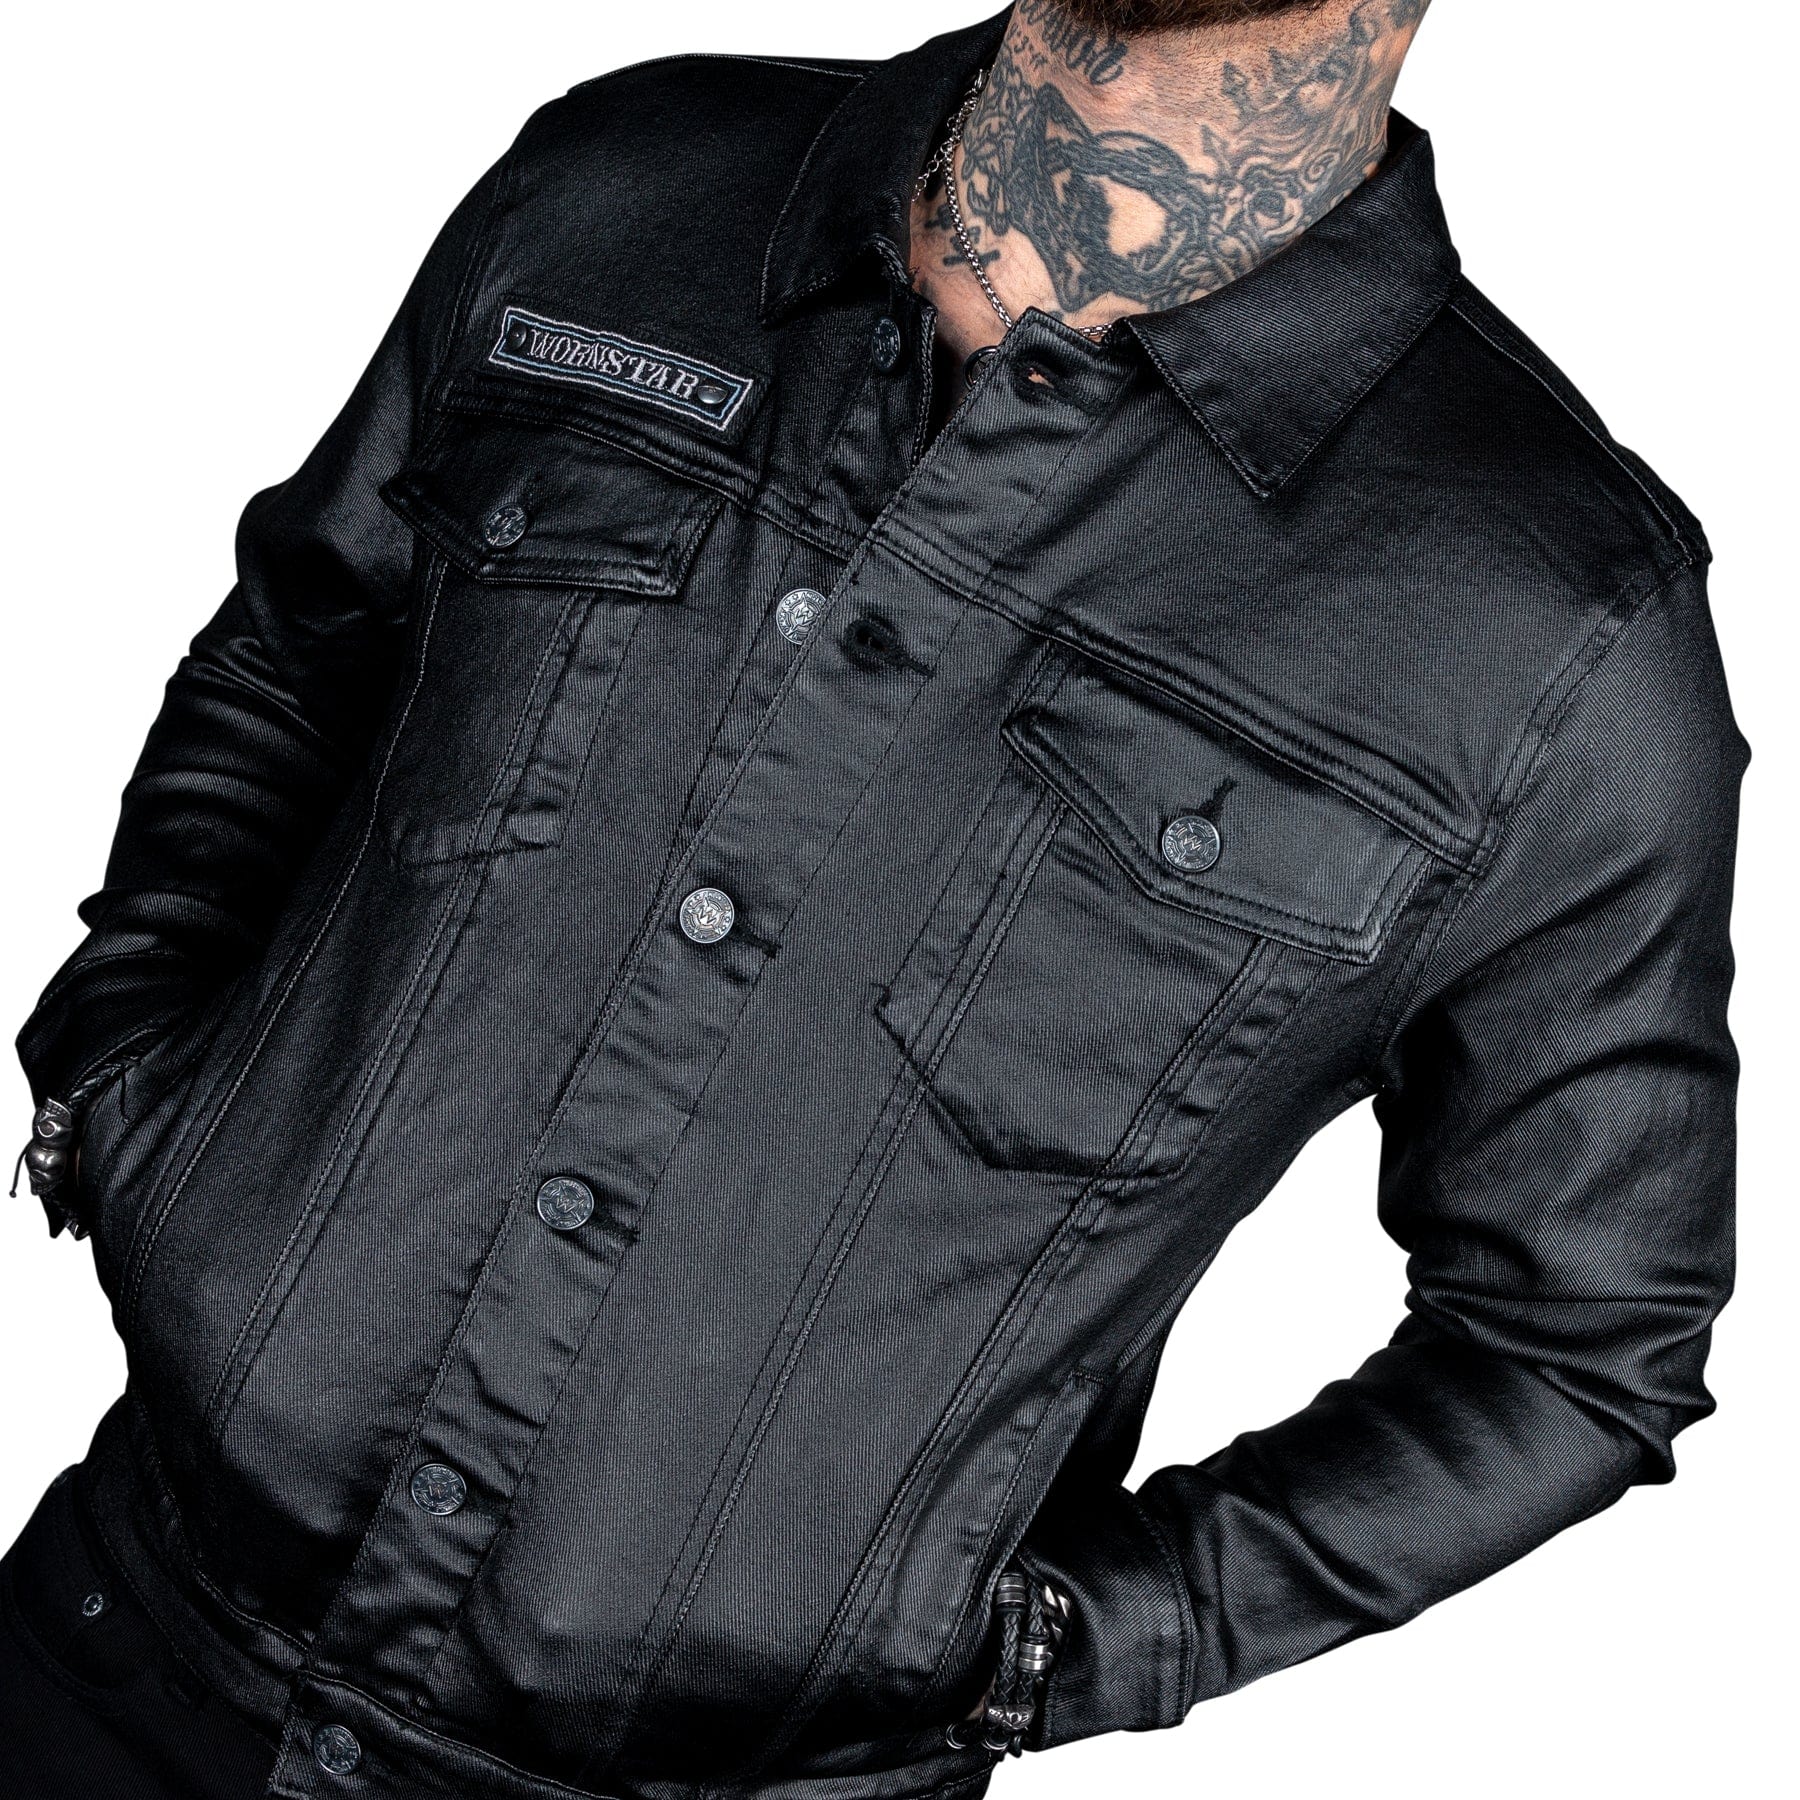 Cruiser - Men's Leather Jacket - Franky Fashion